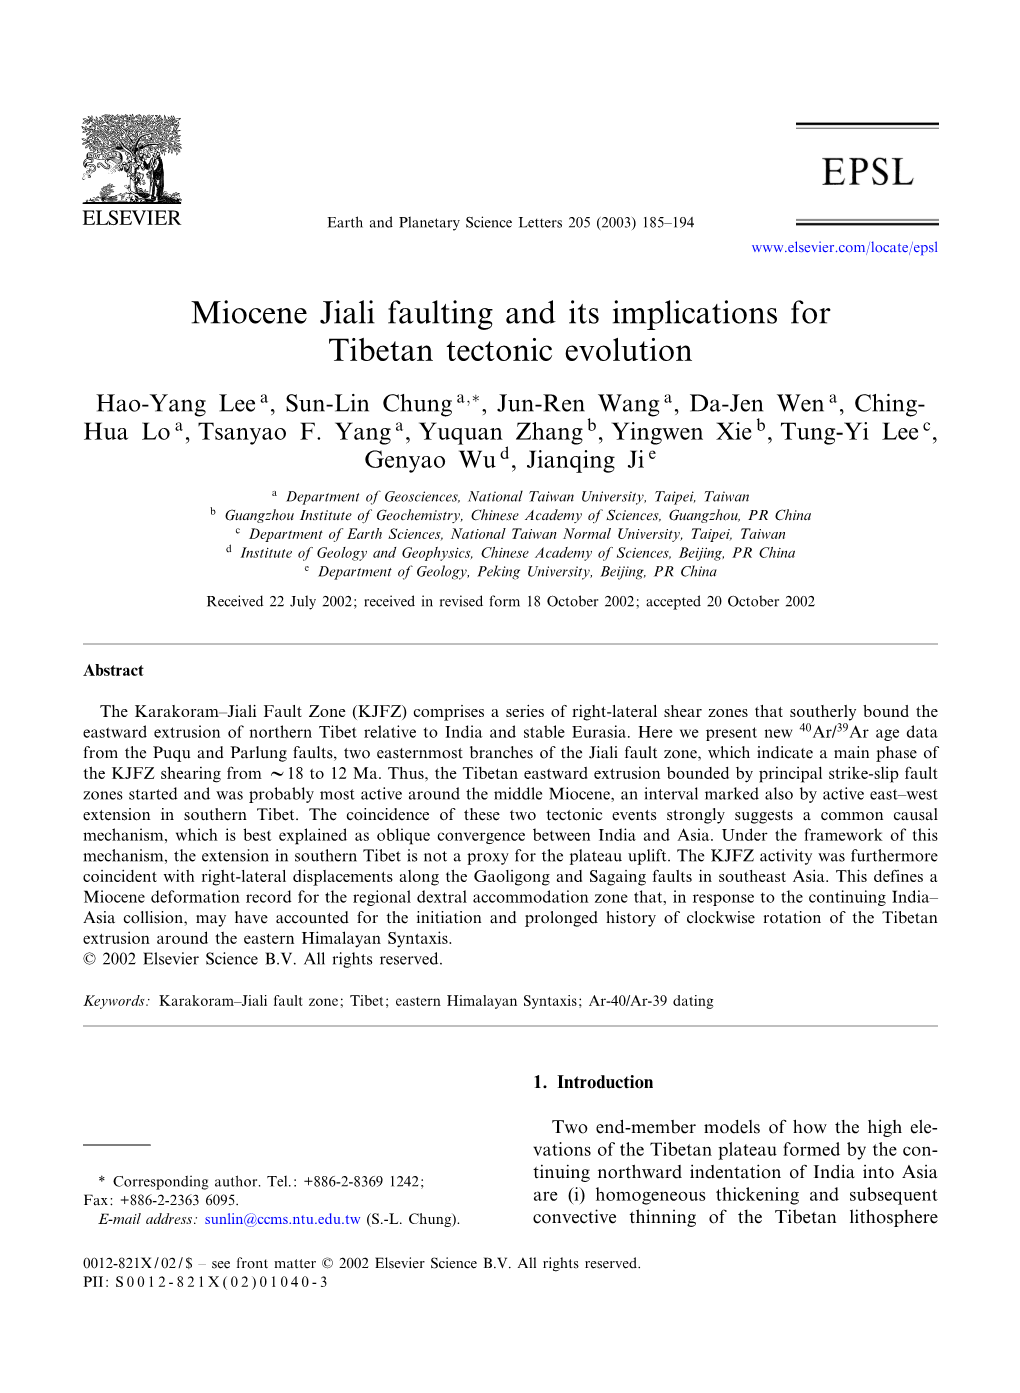 Miocene Jiali Faulting and Its Implications for Tibetan Tectonic Evolution